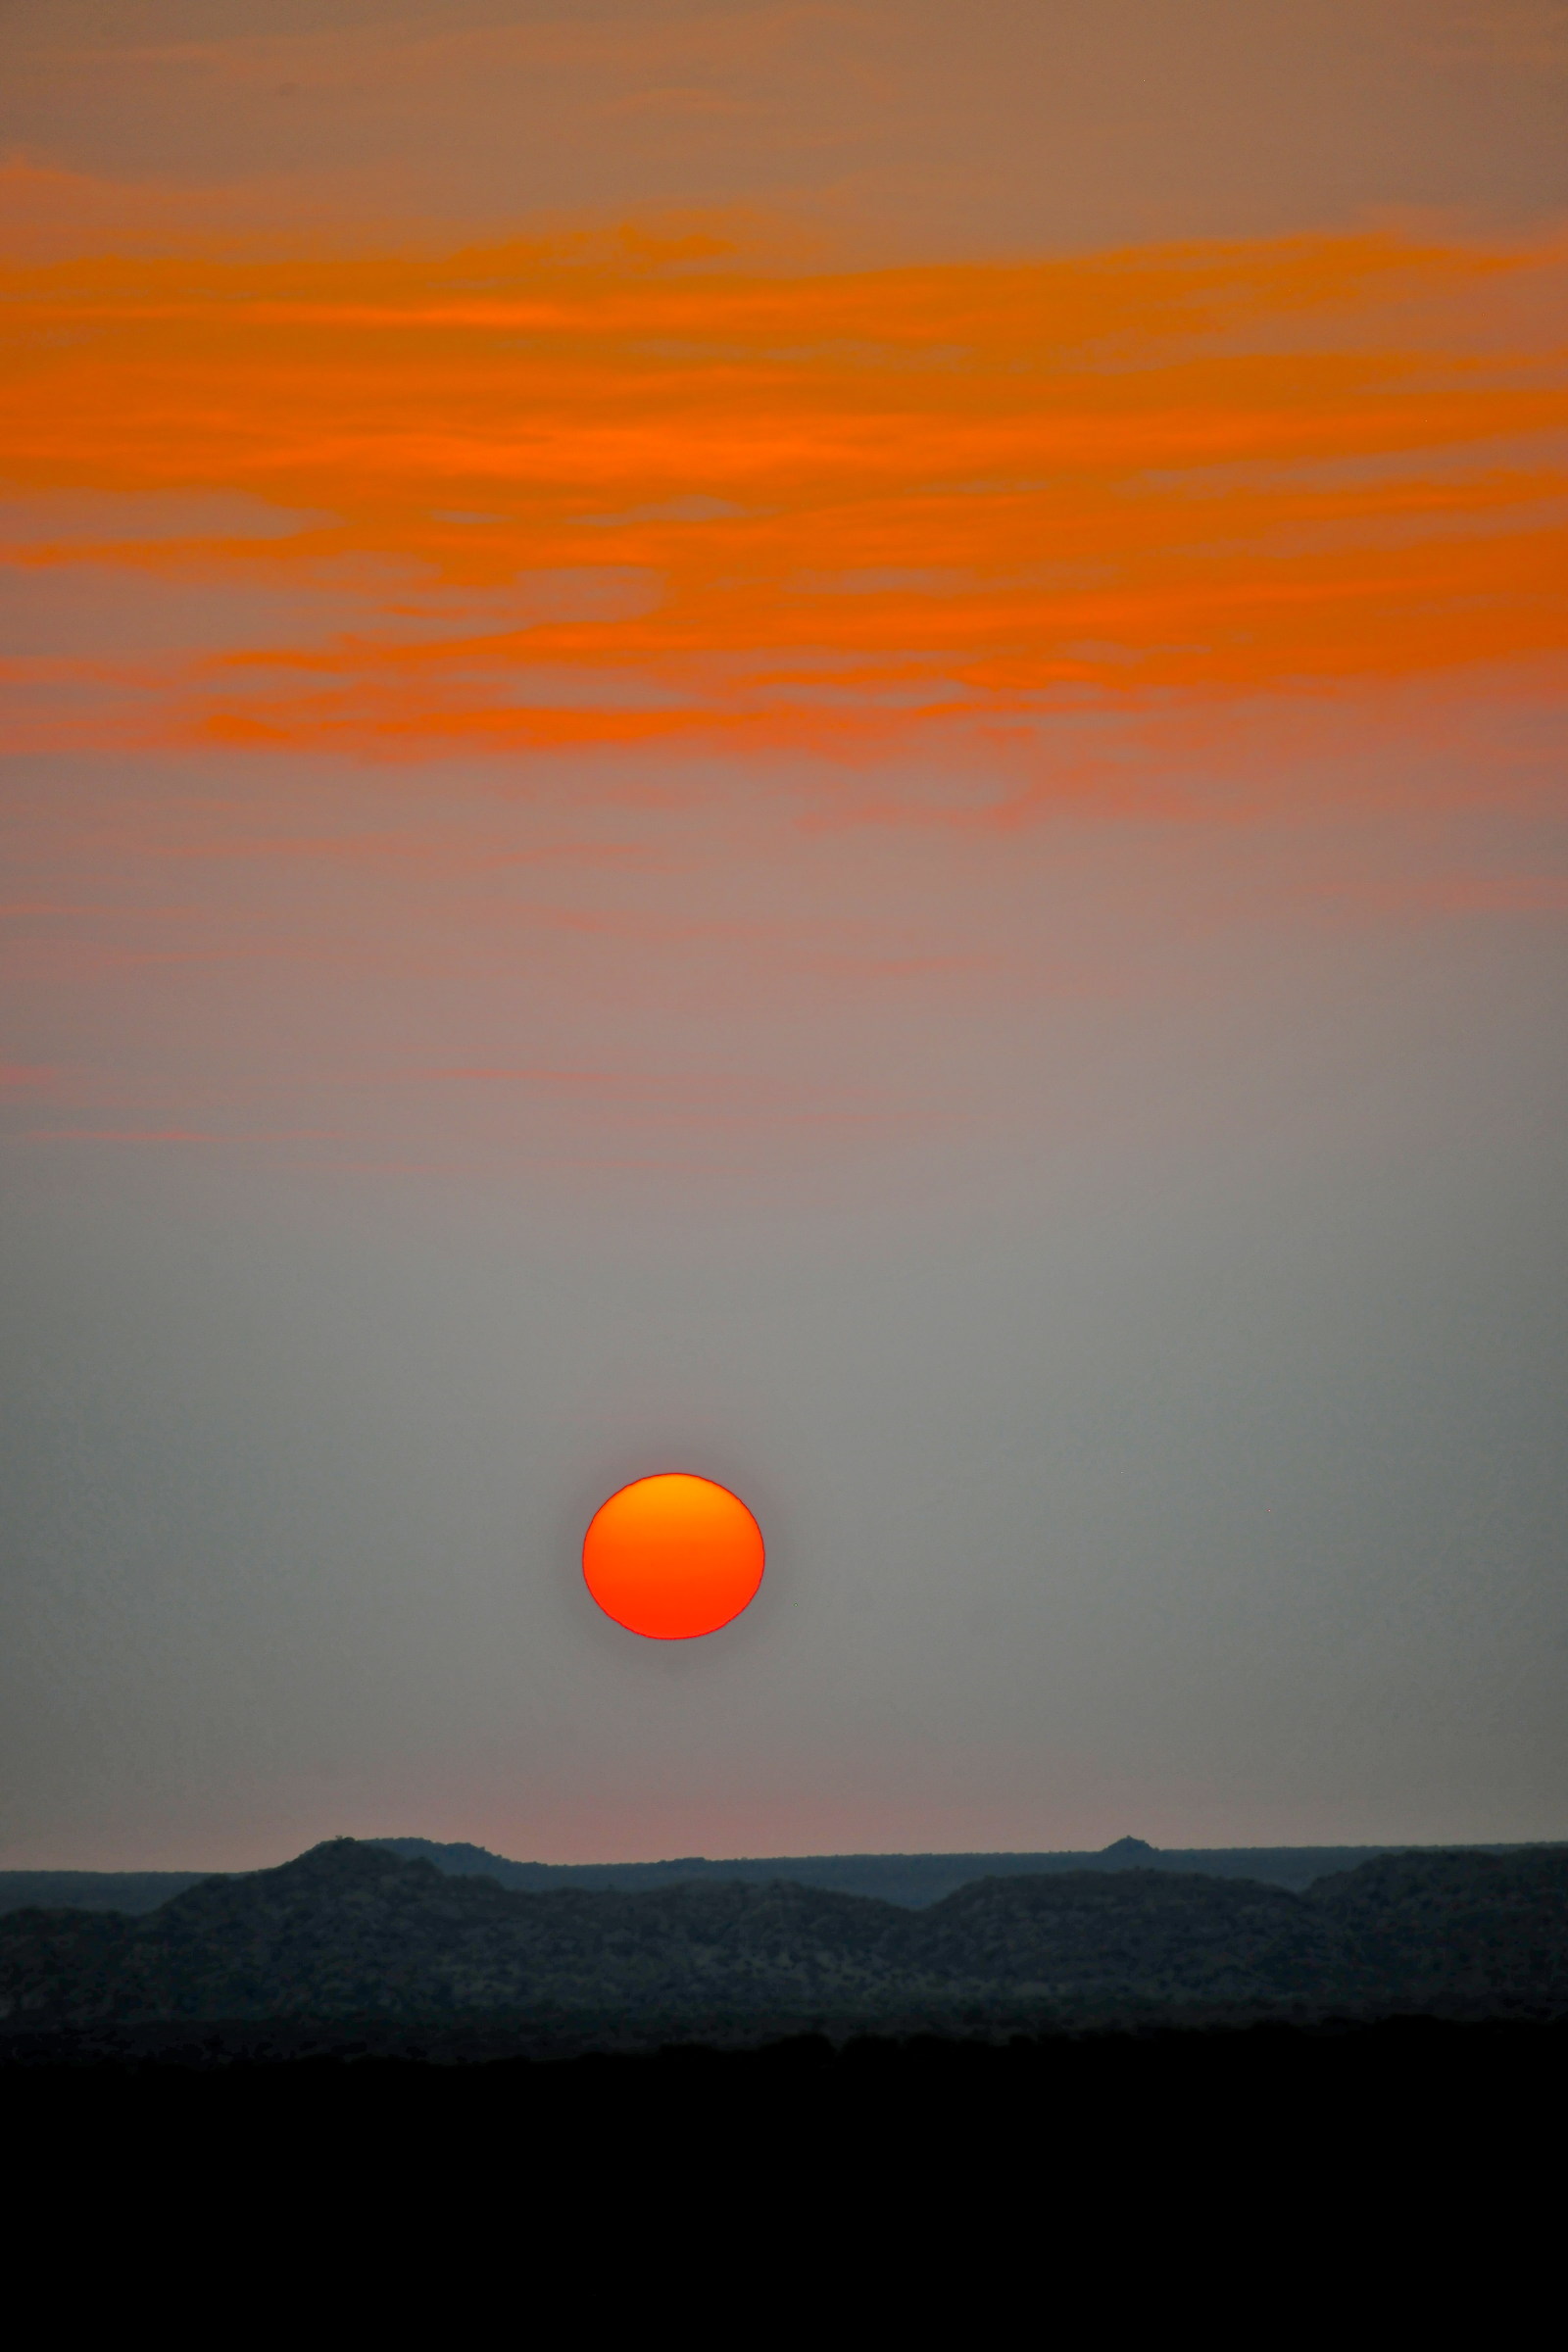 tramonto namibiano...